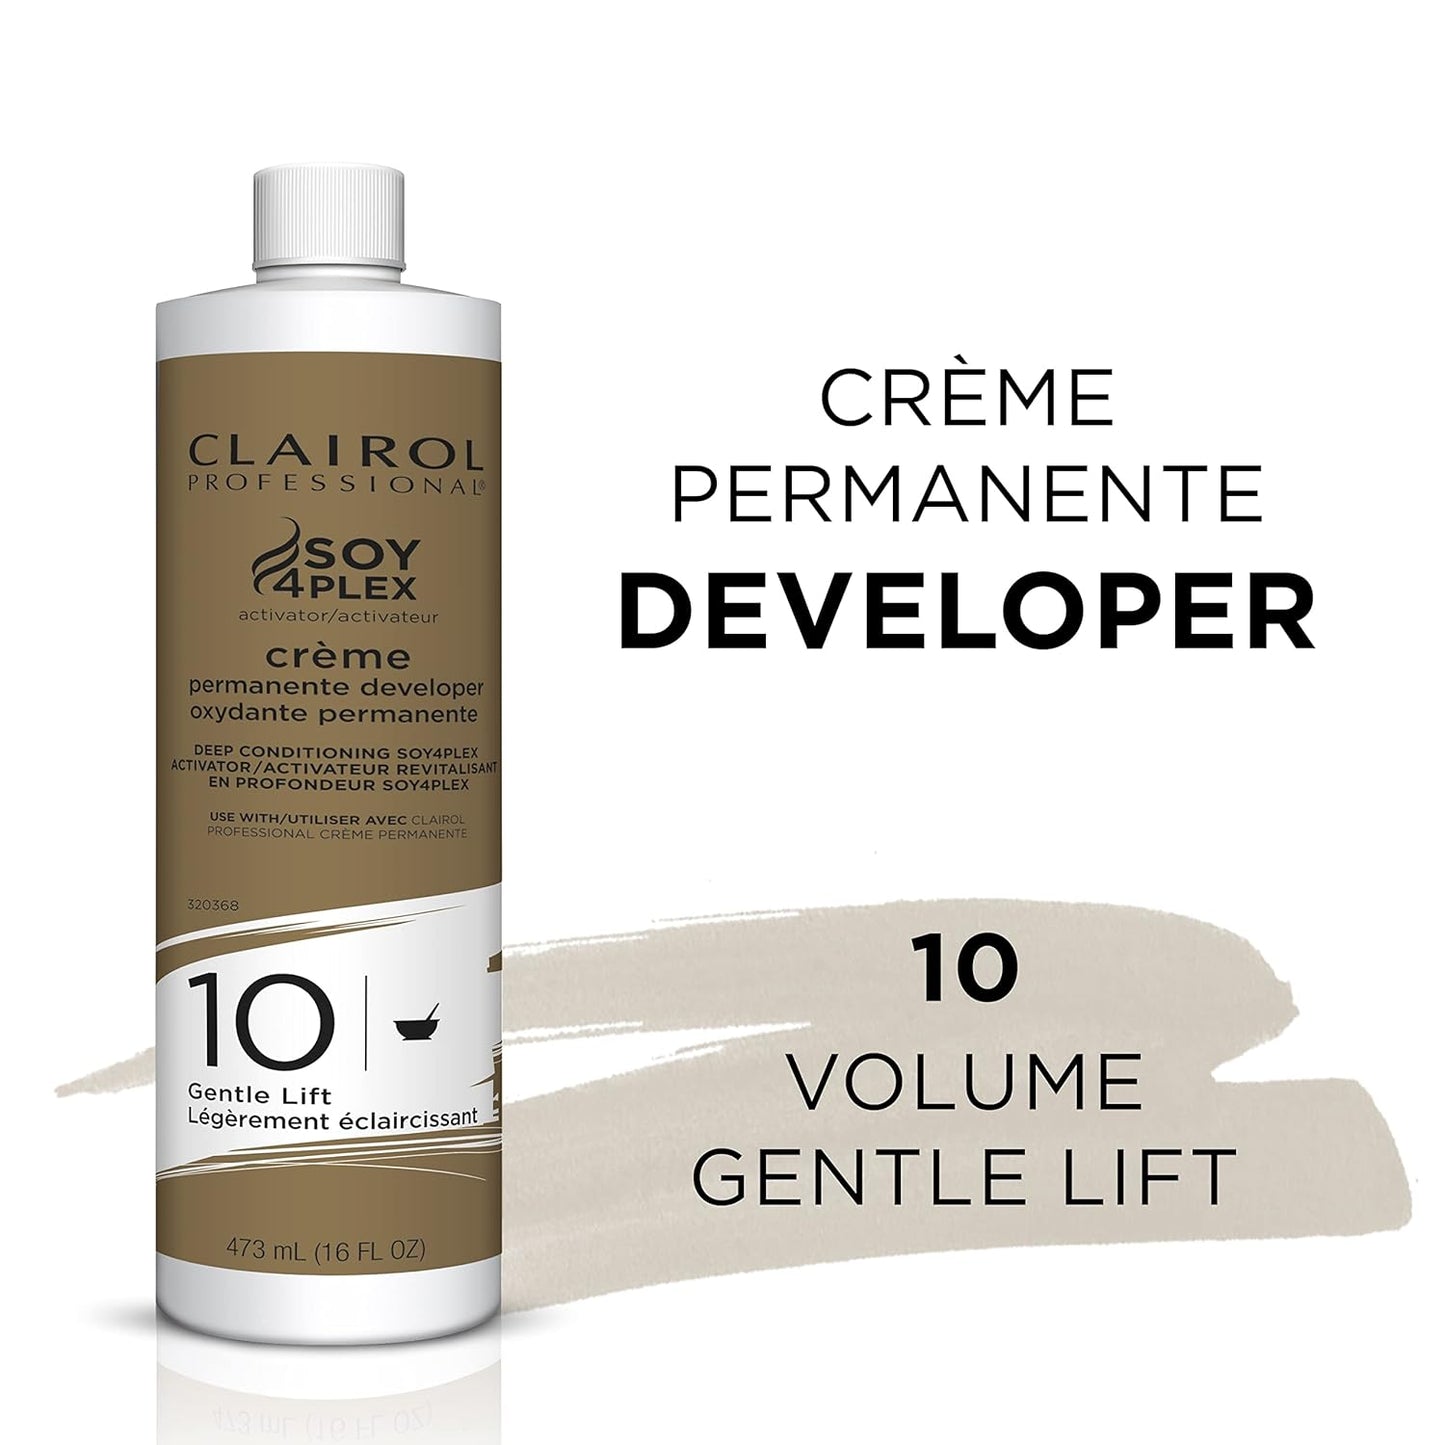 Premium Crème Permanent Developer 16oz